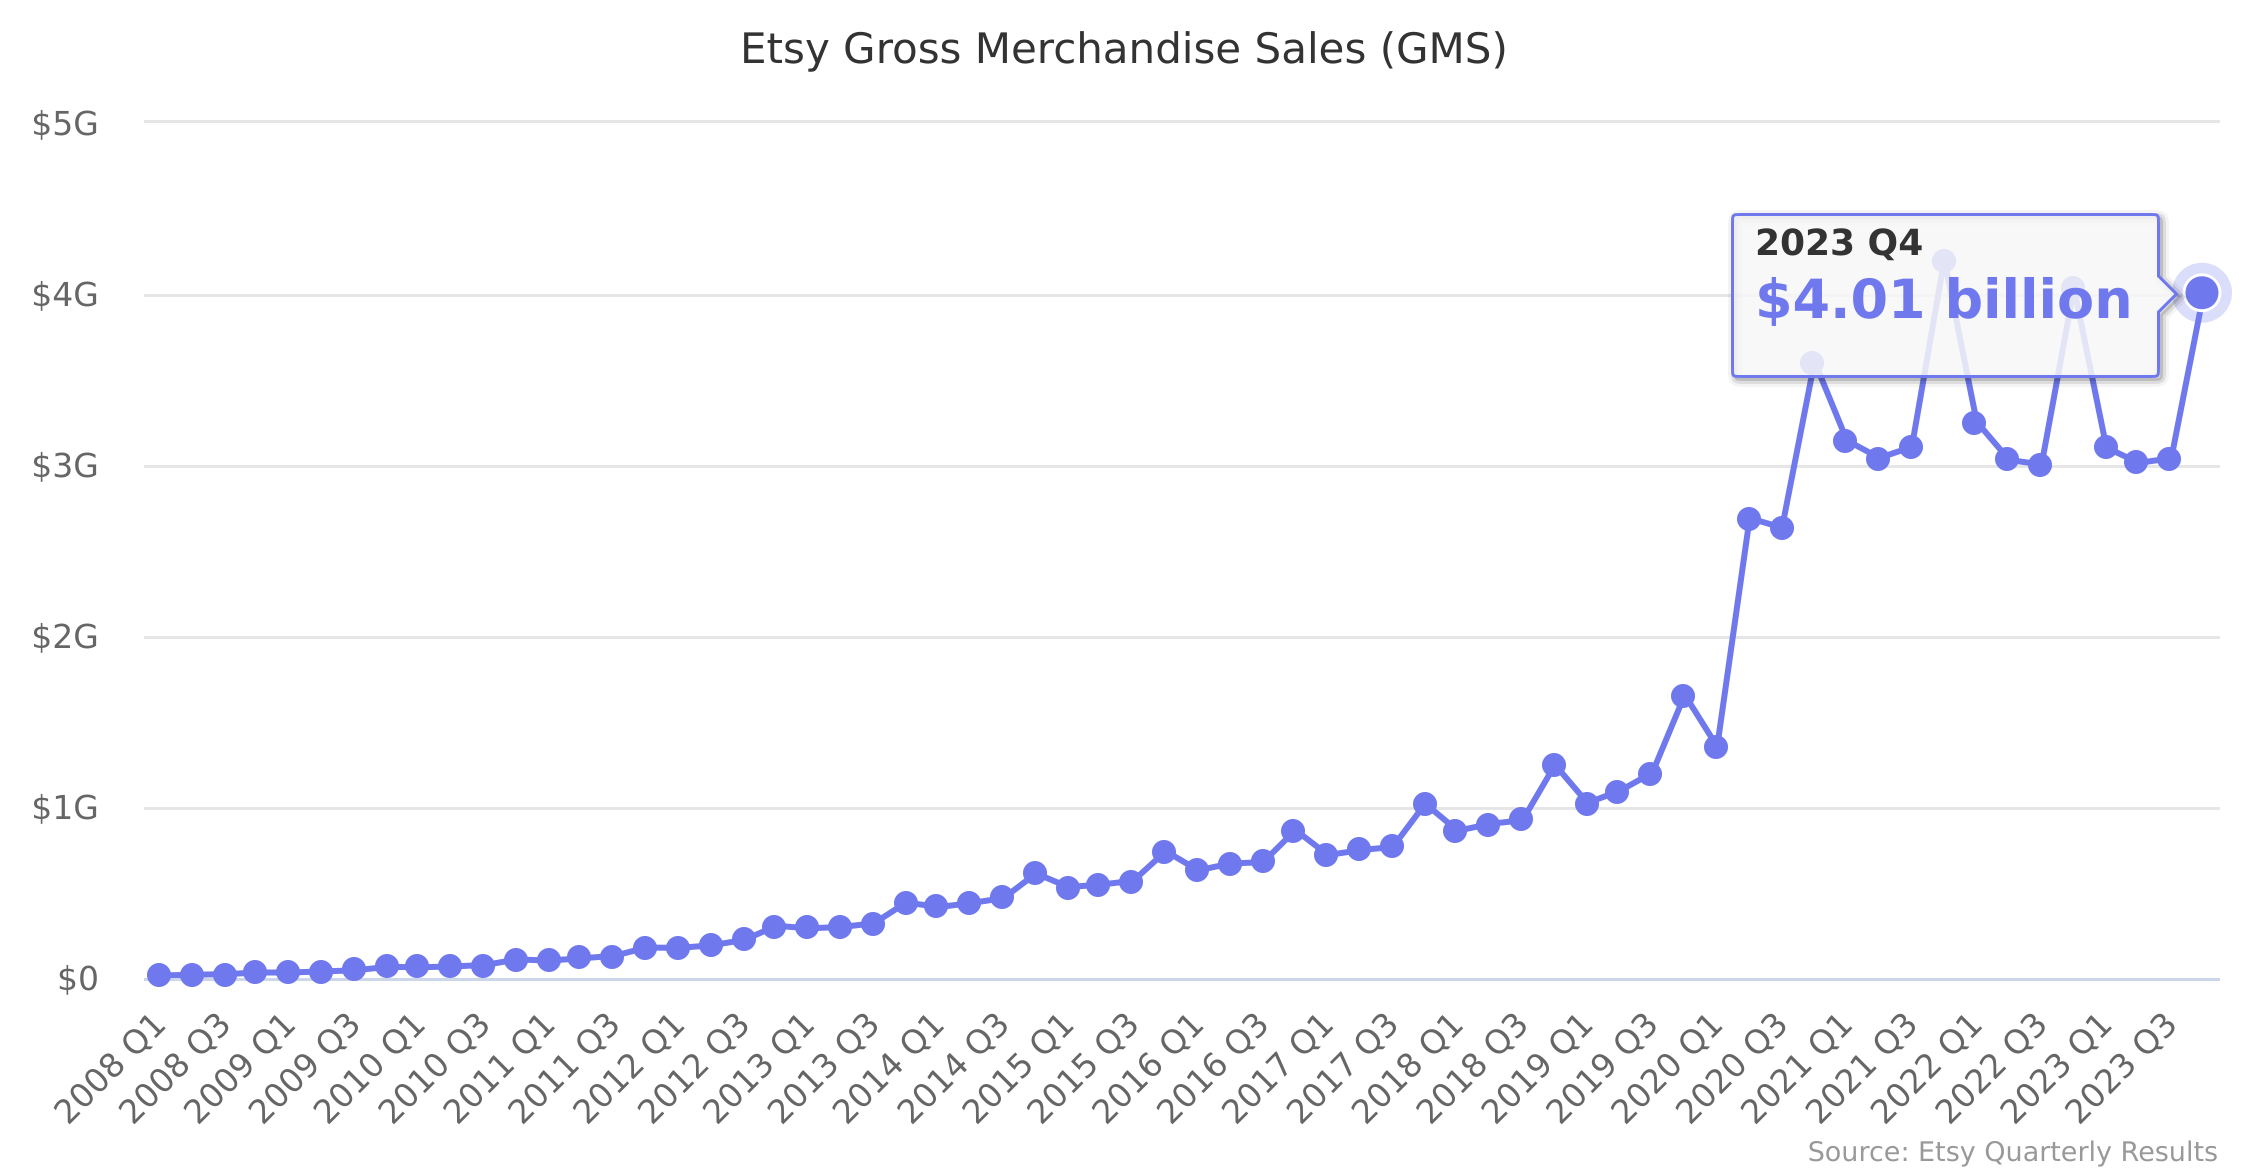 Etsy Gross Merchandise Sales (GMS) 2008-2023